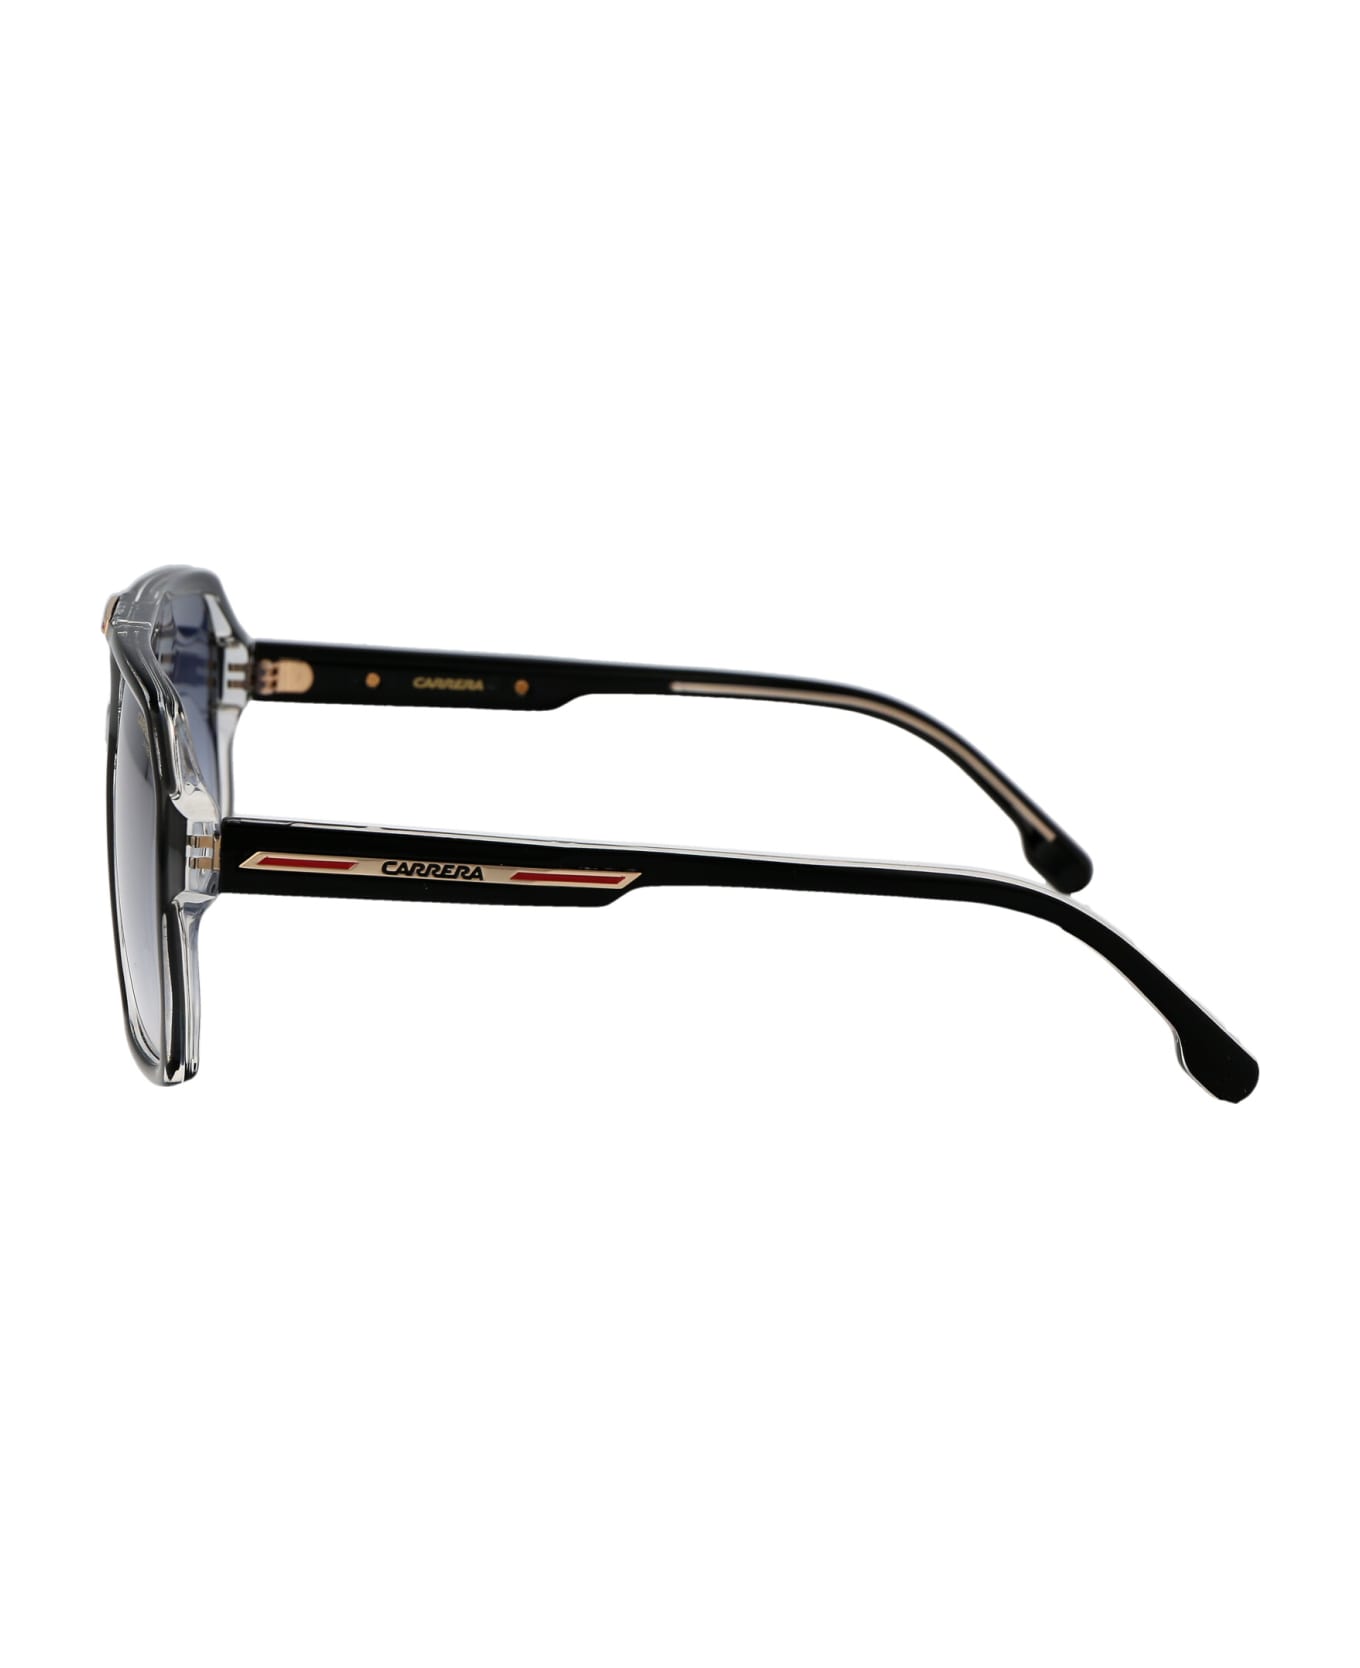 Carrera Victory C 01/s Sunglasses - EI708 BLACK CRY_ サングラス